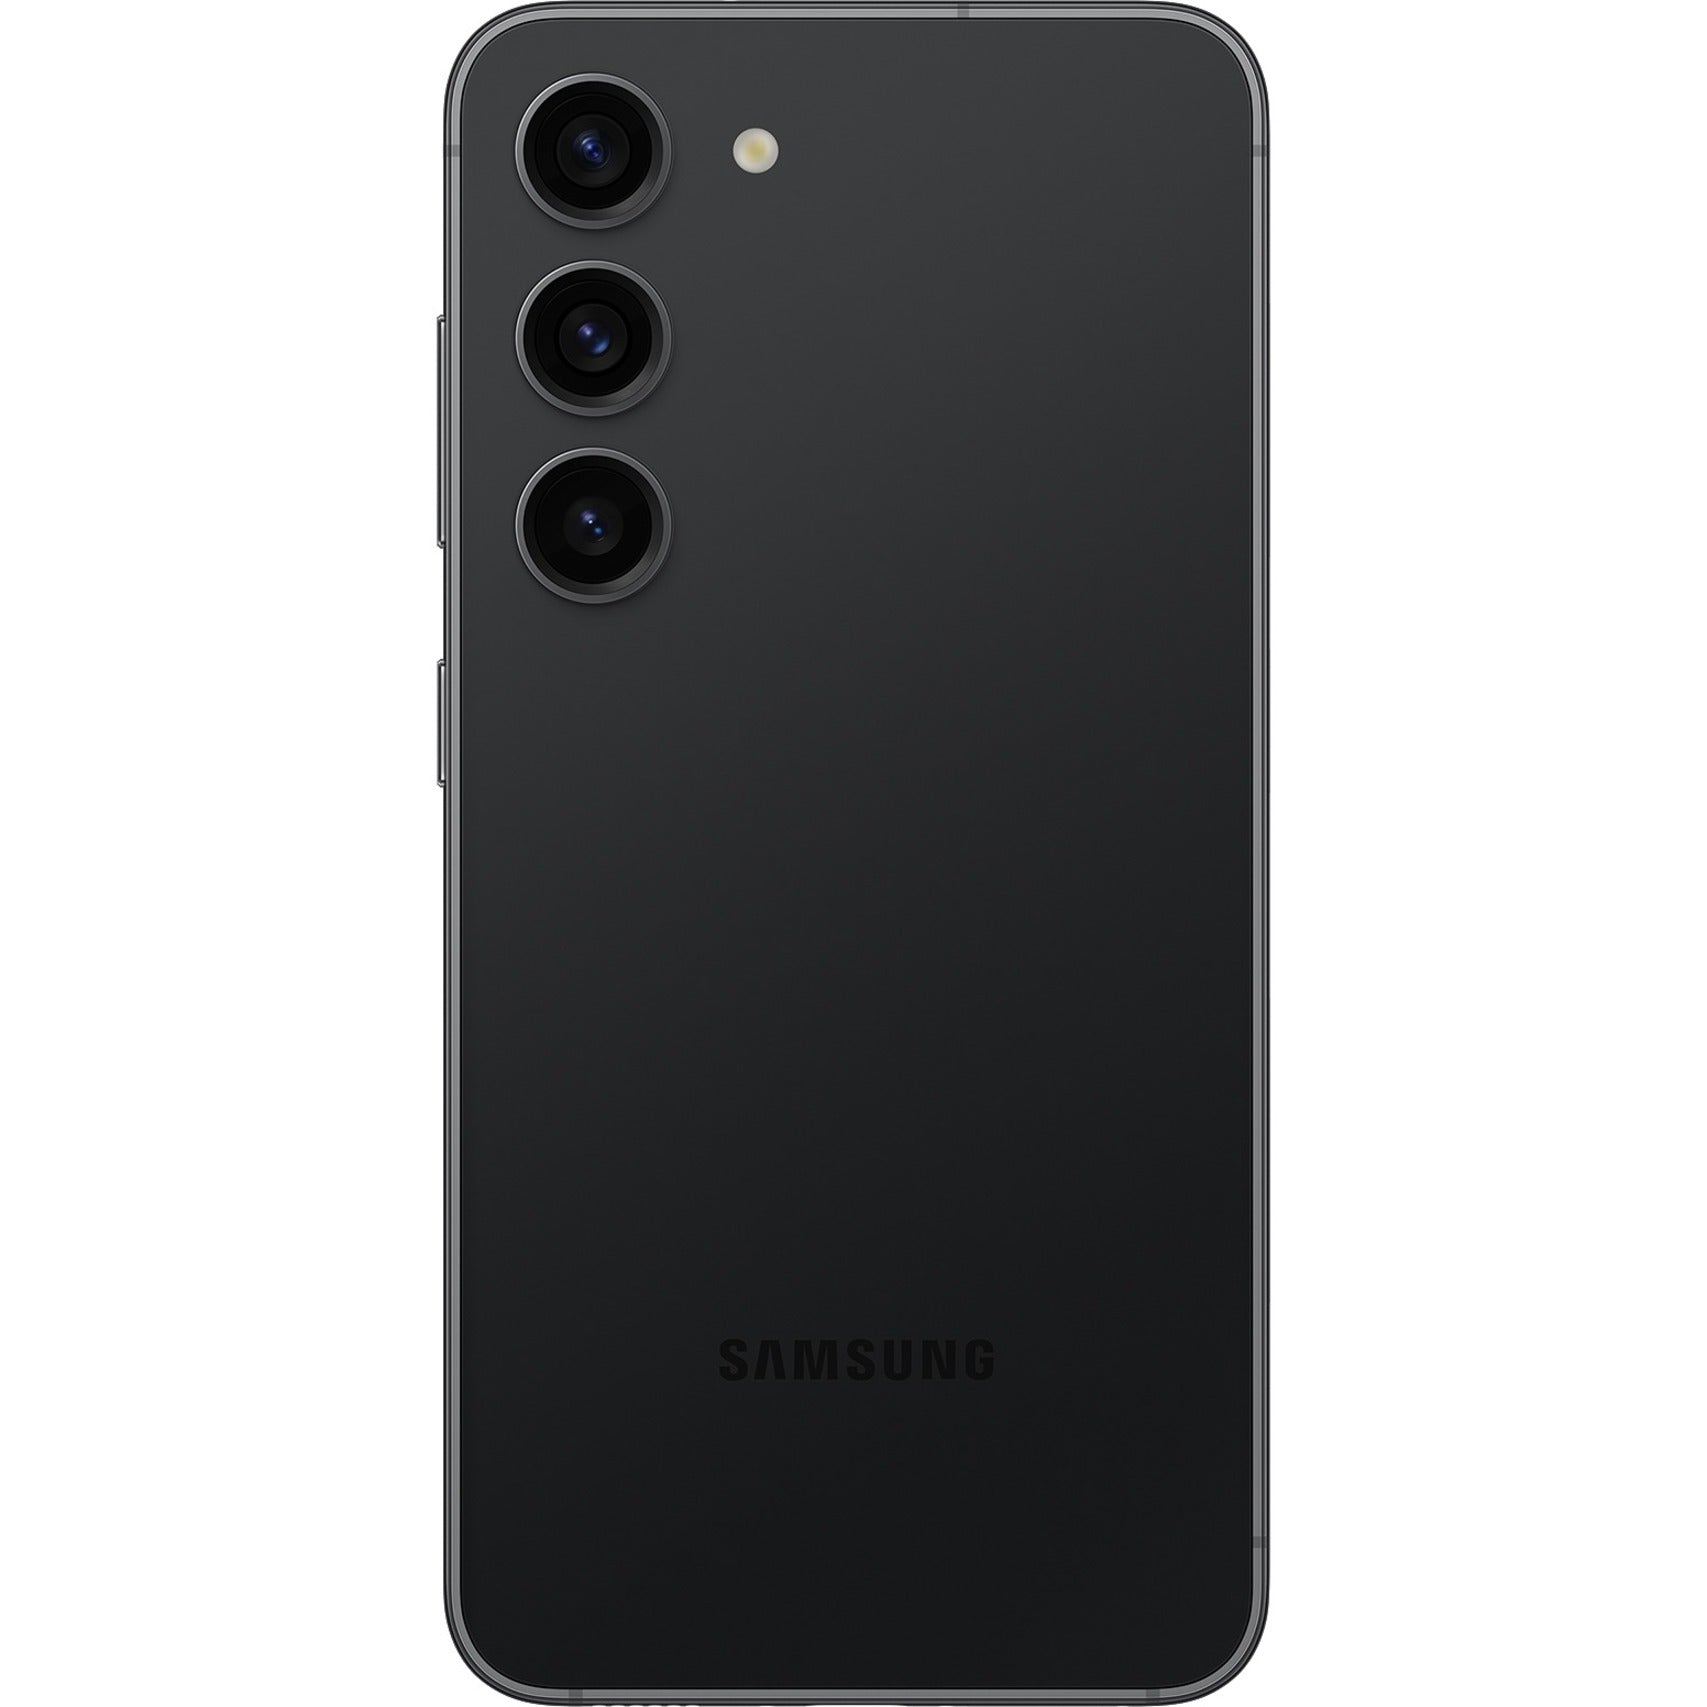 Tienda Online Samsung Costa Rica Galaxy S23 Ultra 256GB